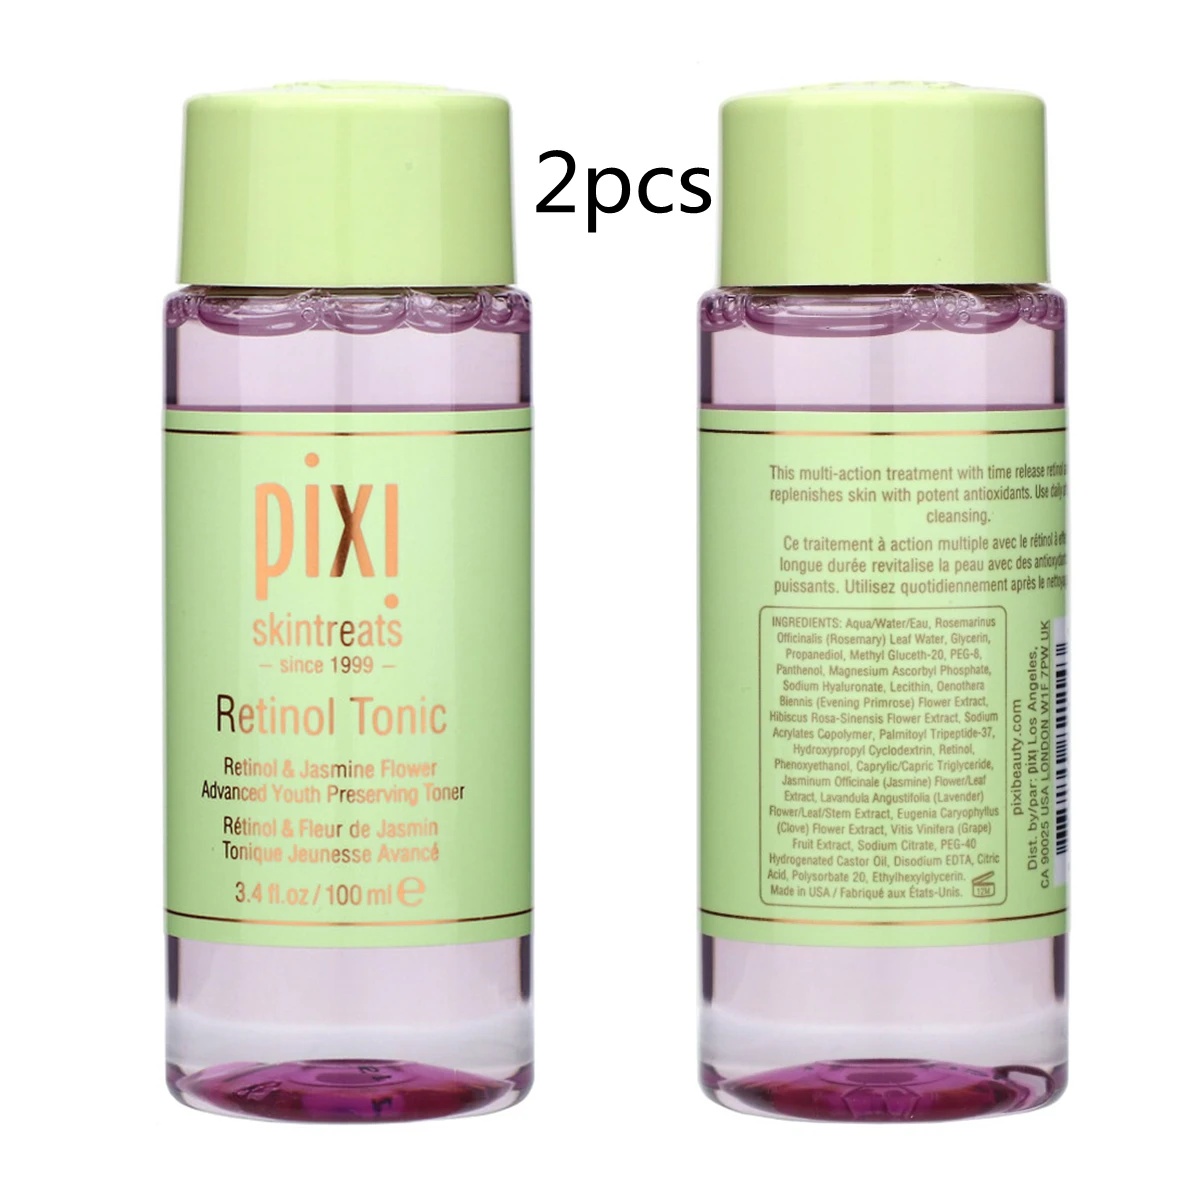 

Pixi Toner Retinol Tonic Rose Lotion Moisturizing Anti wrinkle Firming Soothing Brightening Fine Lines Toner Facial Skin Care 2P